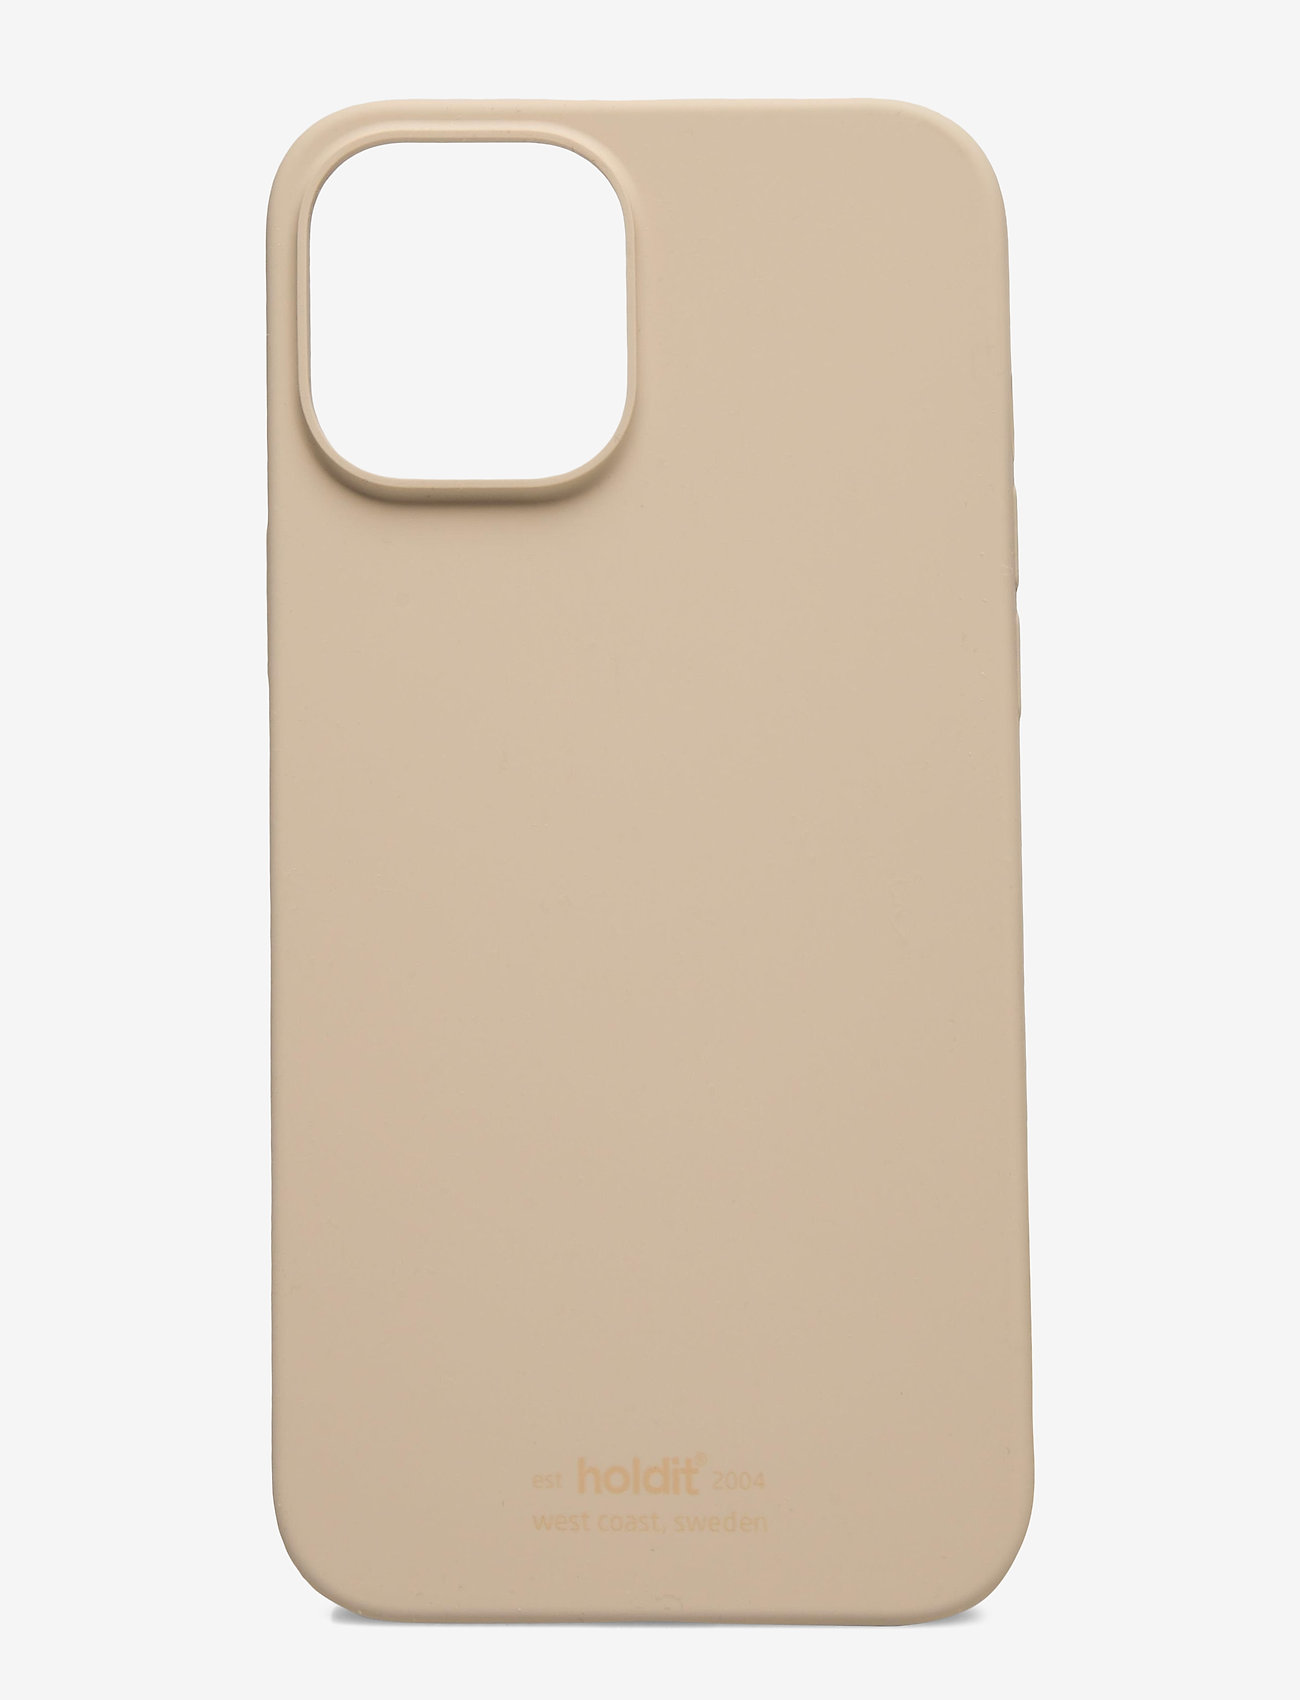 Holdit - Silicone Case iPhone 12Pro Max - najniższe ceny - beige - 0